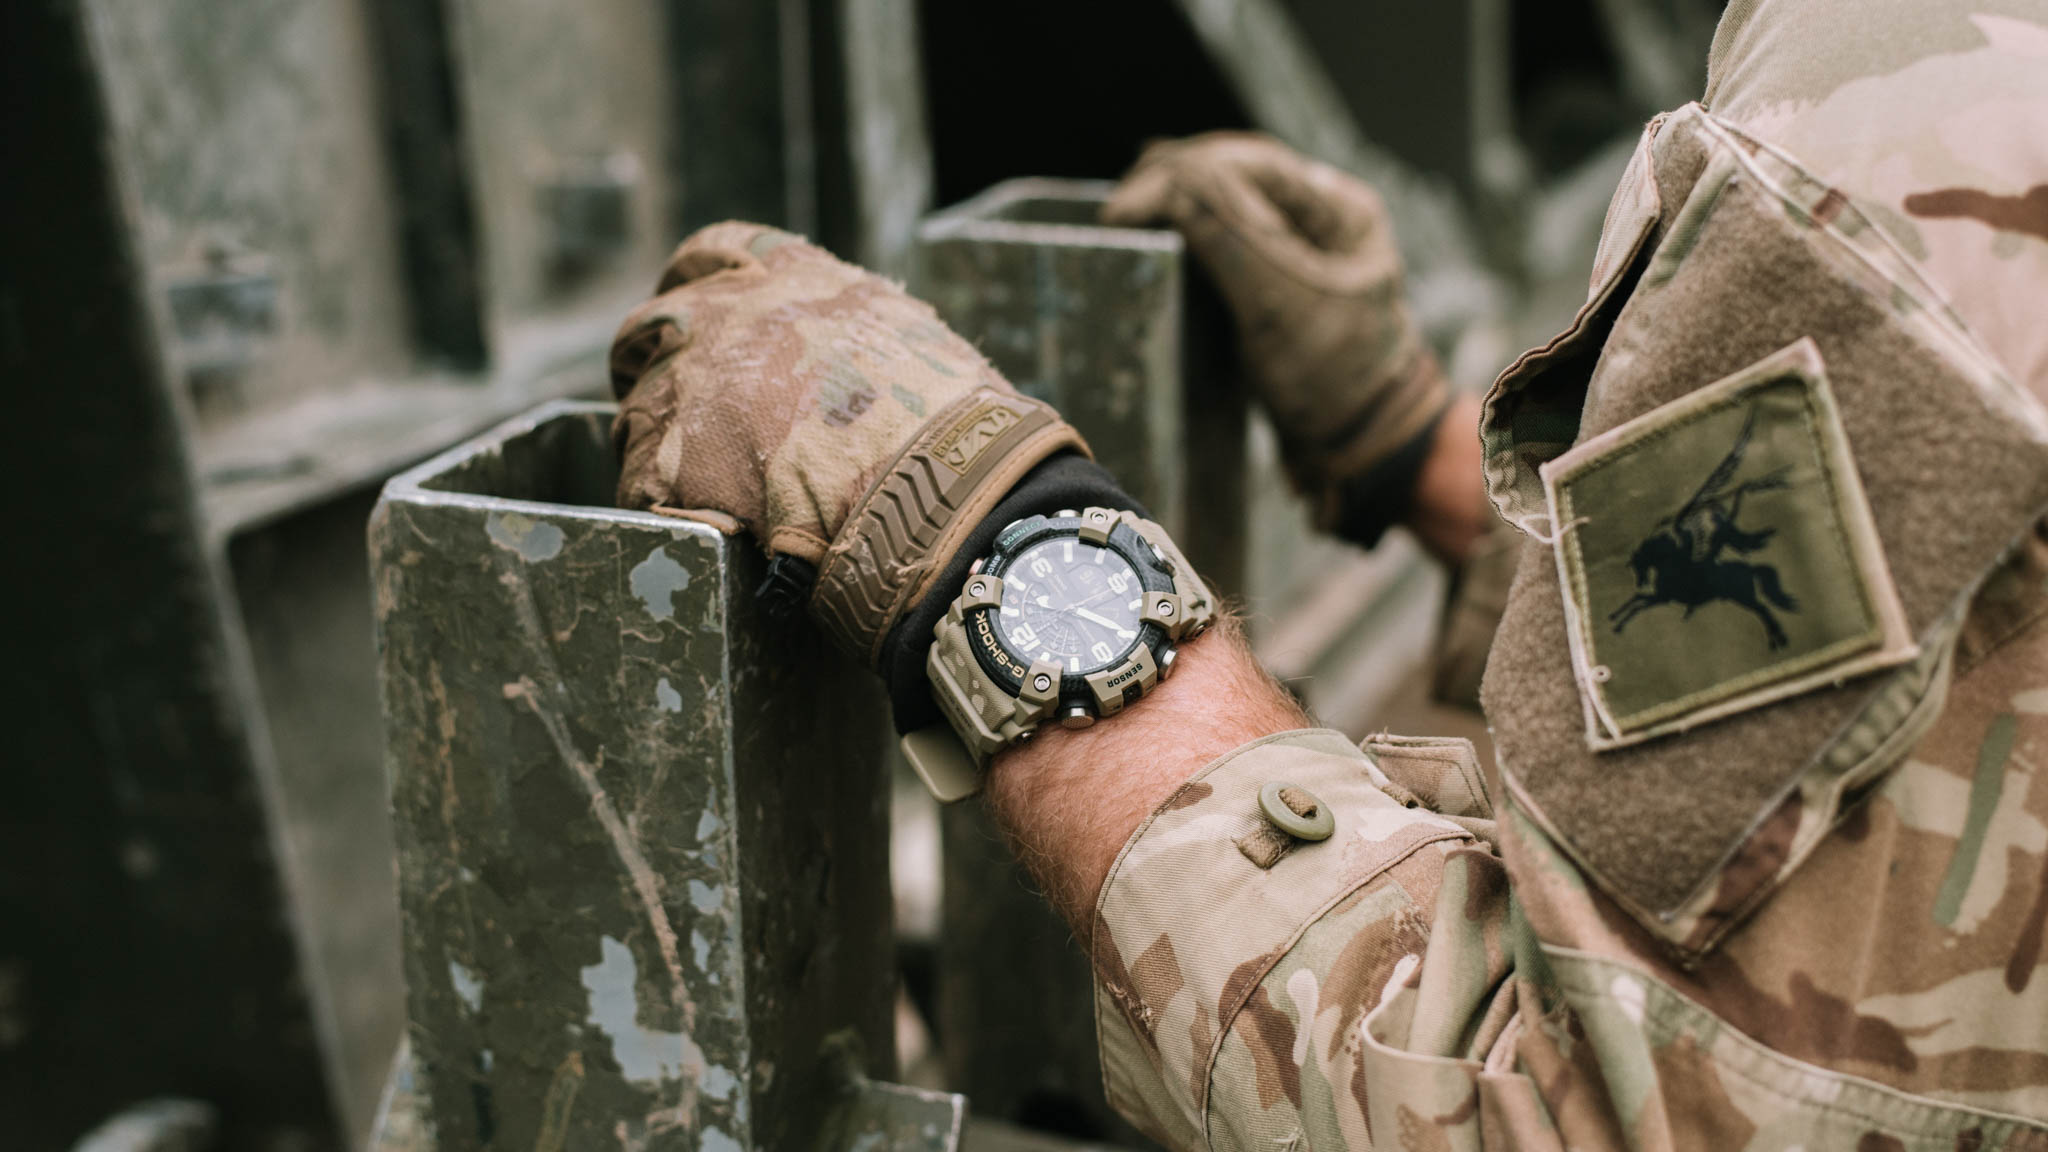 Casio G Shock Military Watches